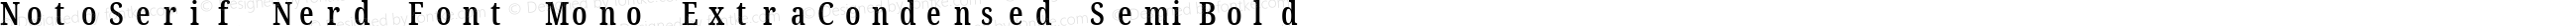 Noto Serif ExtraCondensed SemiBold Nerd Font Complete Mono